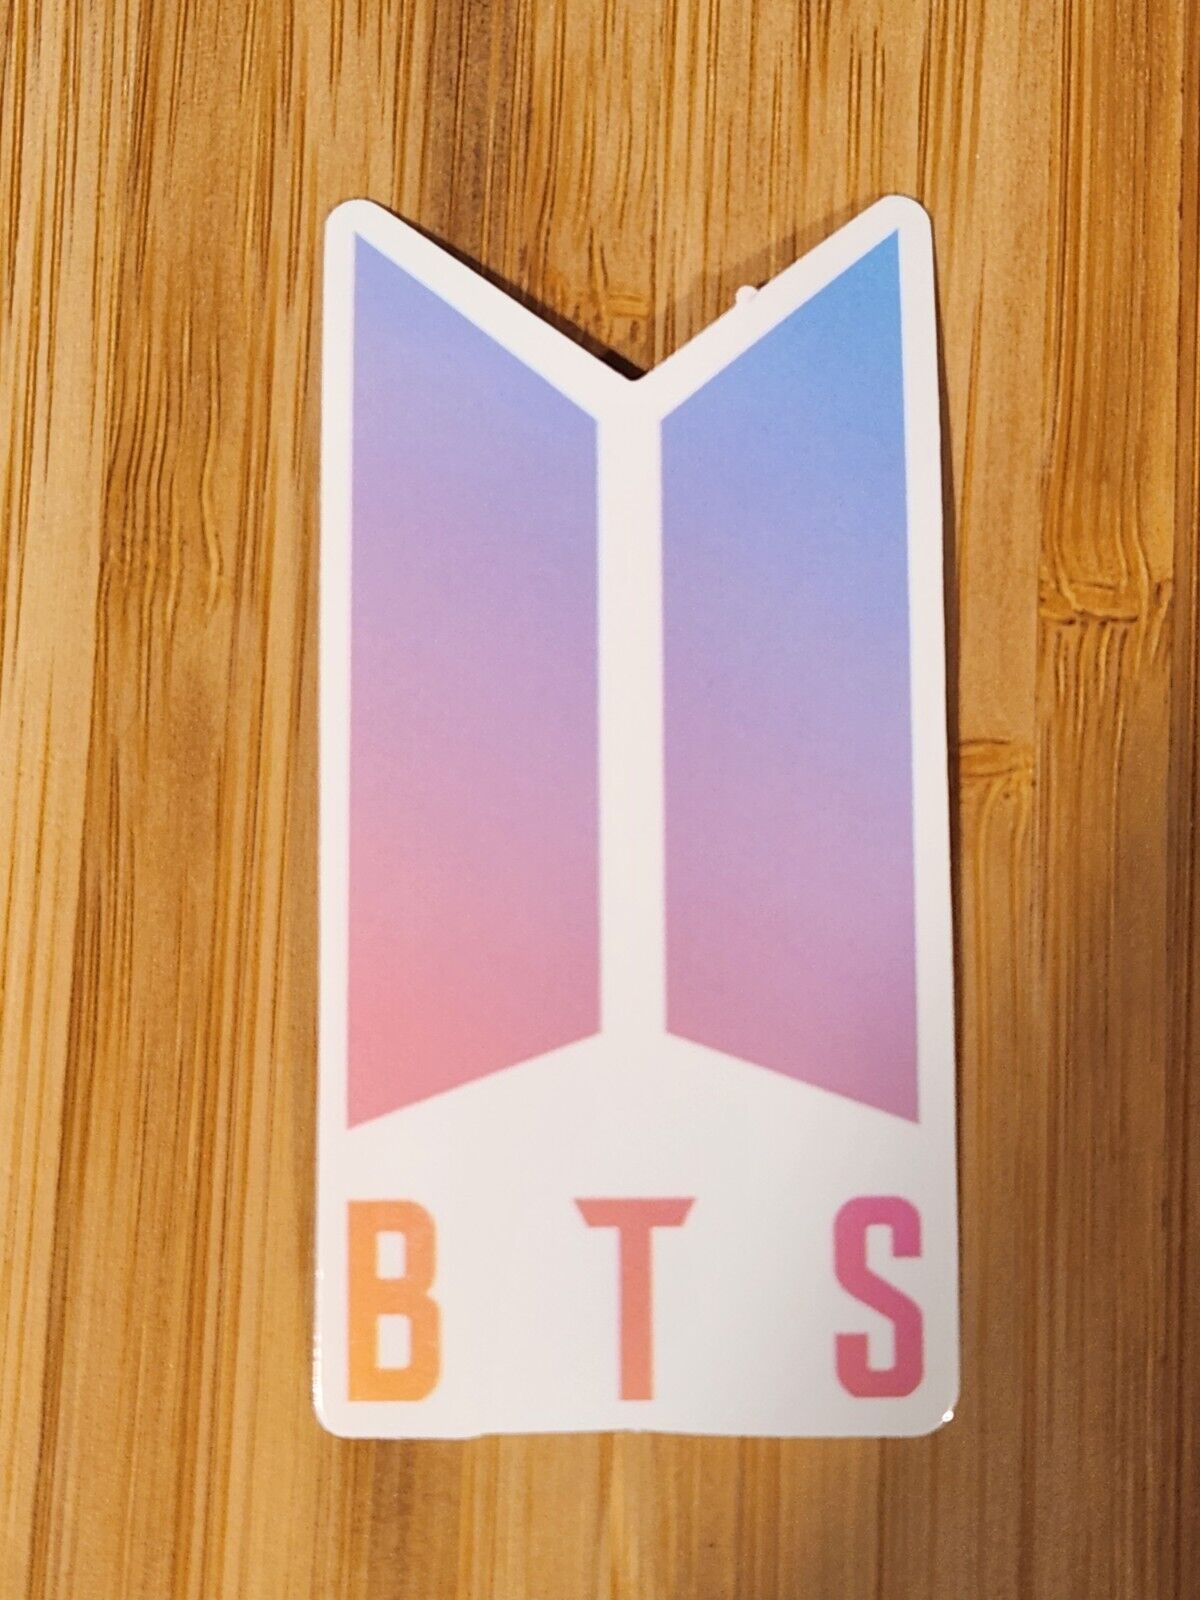 BTS Sticker BTS Decal K-Pop Sticker KPop Sticker South Korean Pop Music Decal